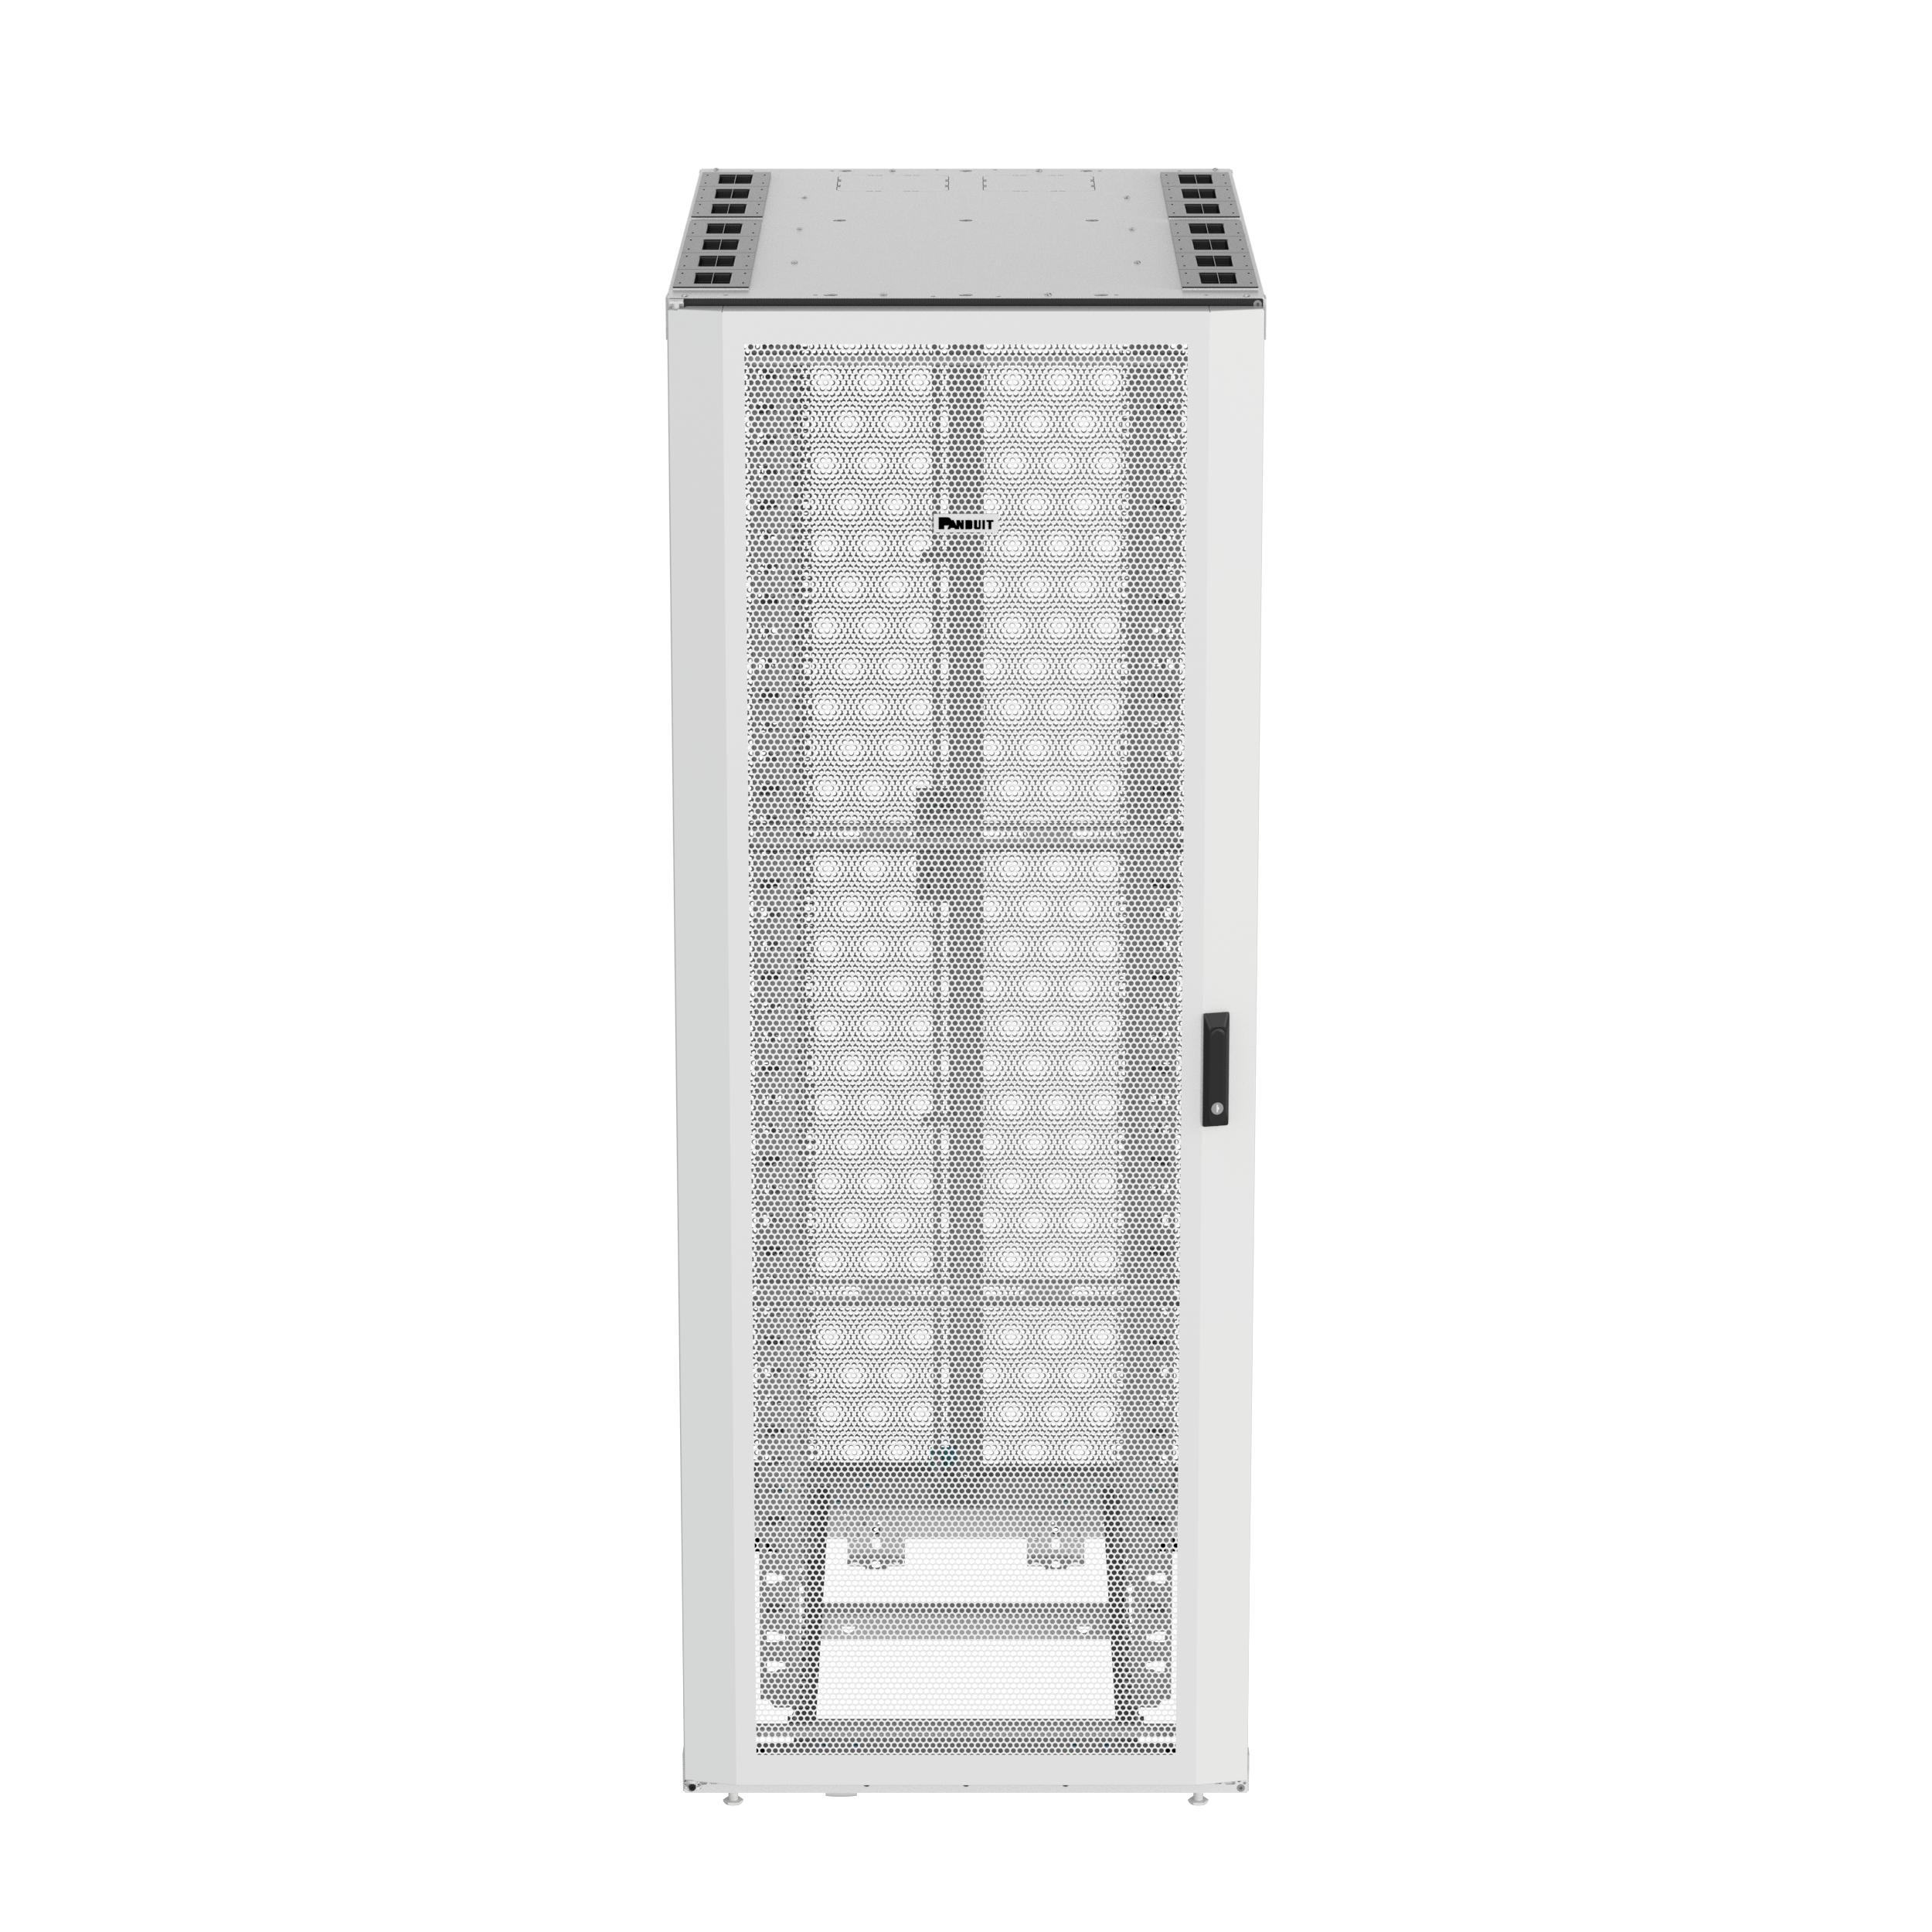 Panduit S8212WU Net-Access™ S-Type Server Cabinet, 42 RU, White